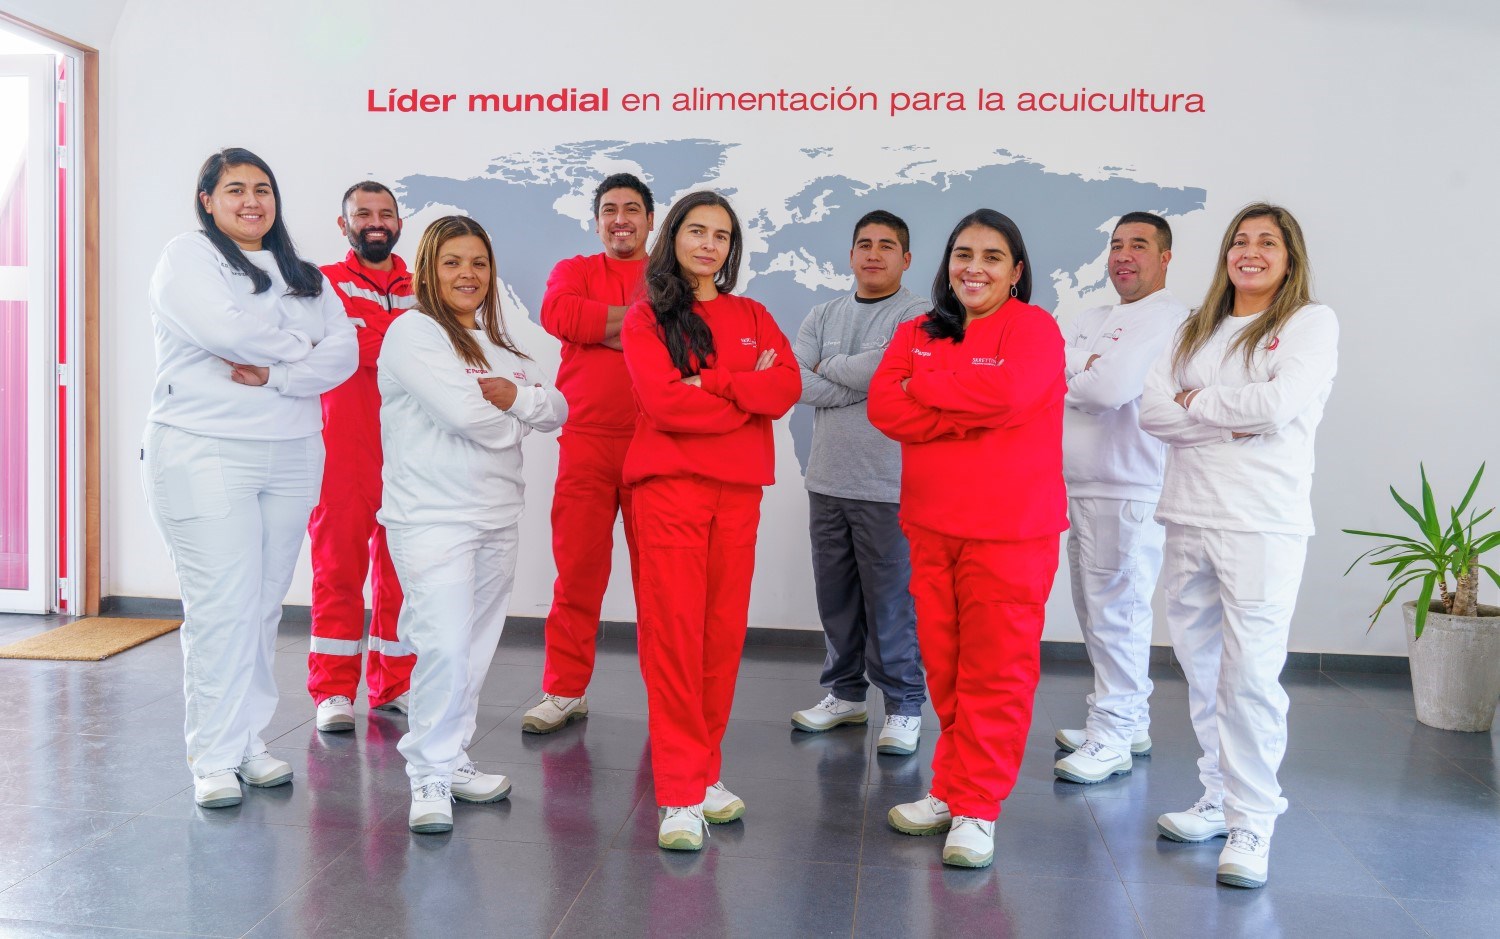 Skretting AI Pargua staff in Chile